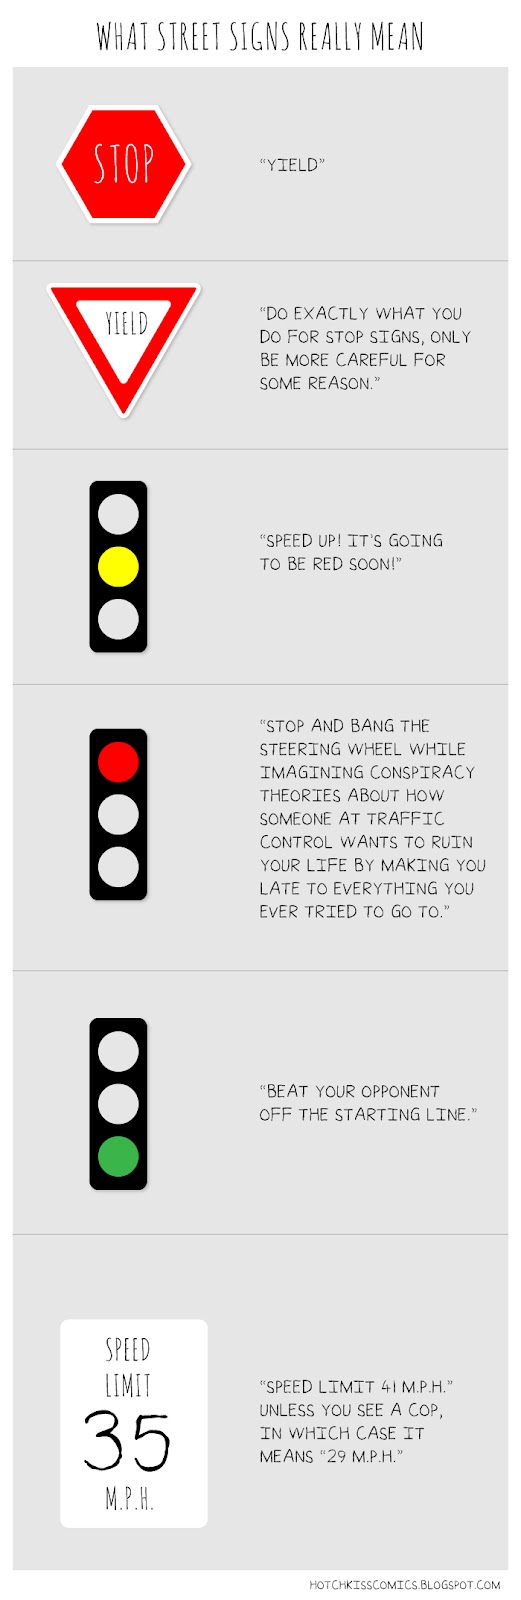 traffic_signals.jpg